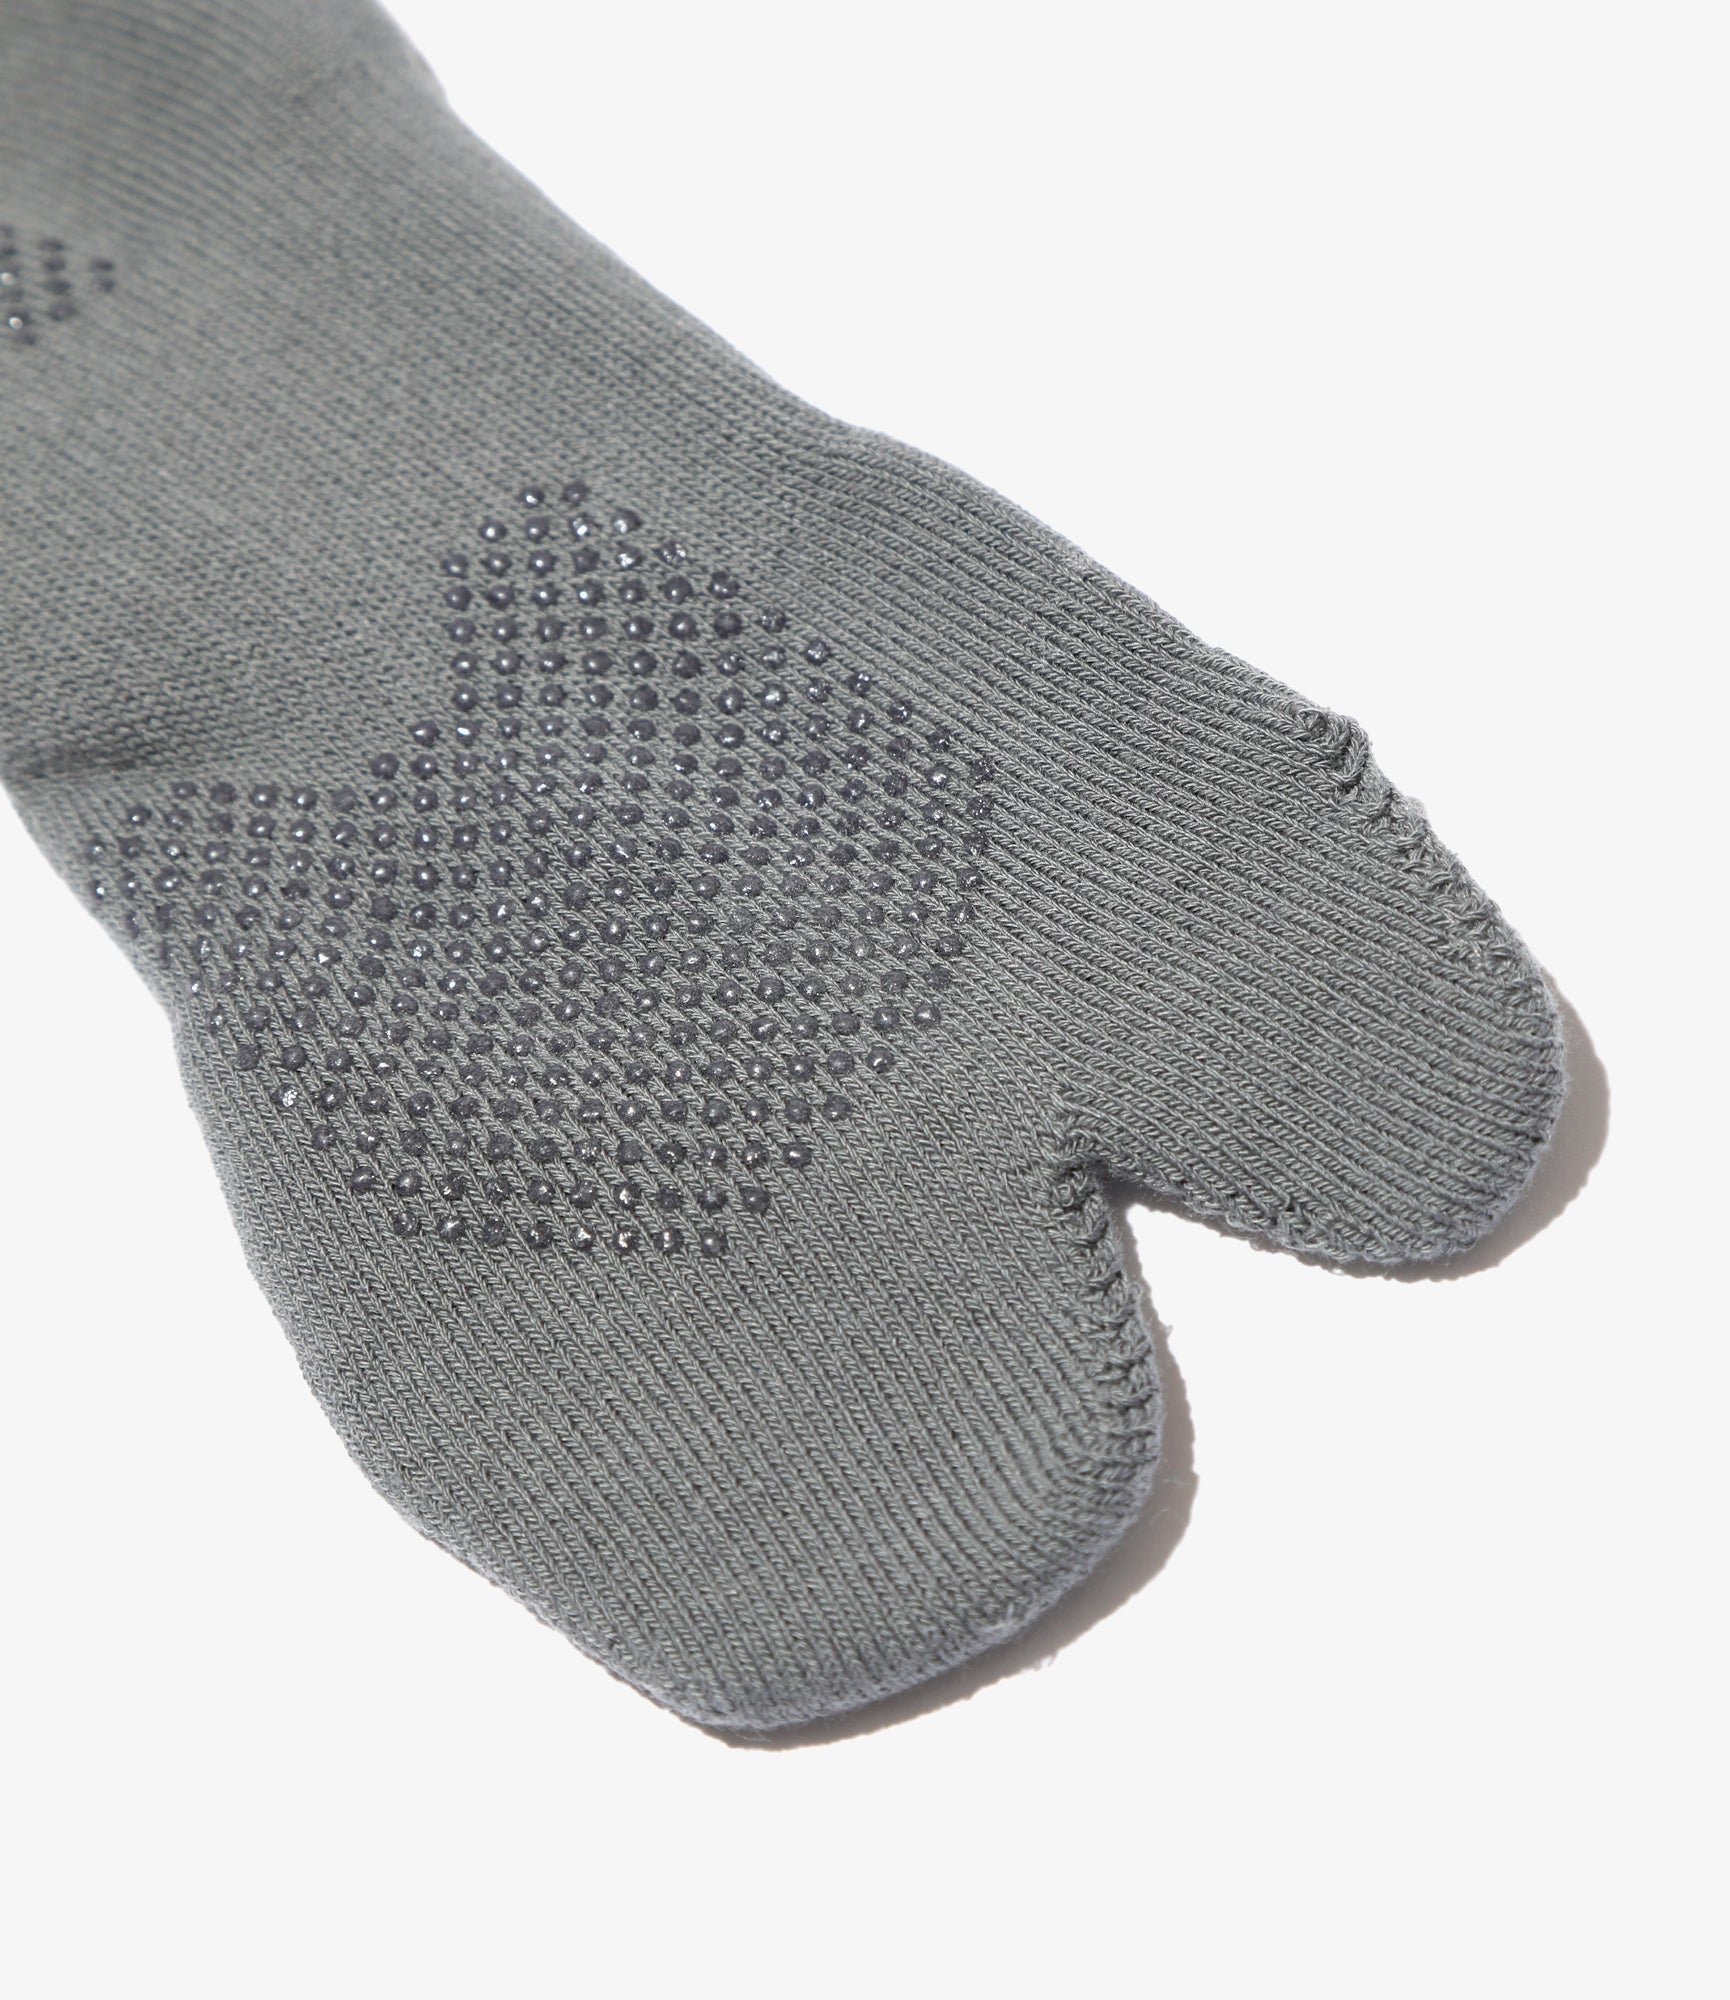 Thumb Ankle Socks - Charcoal - Cool Max